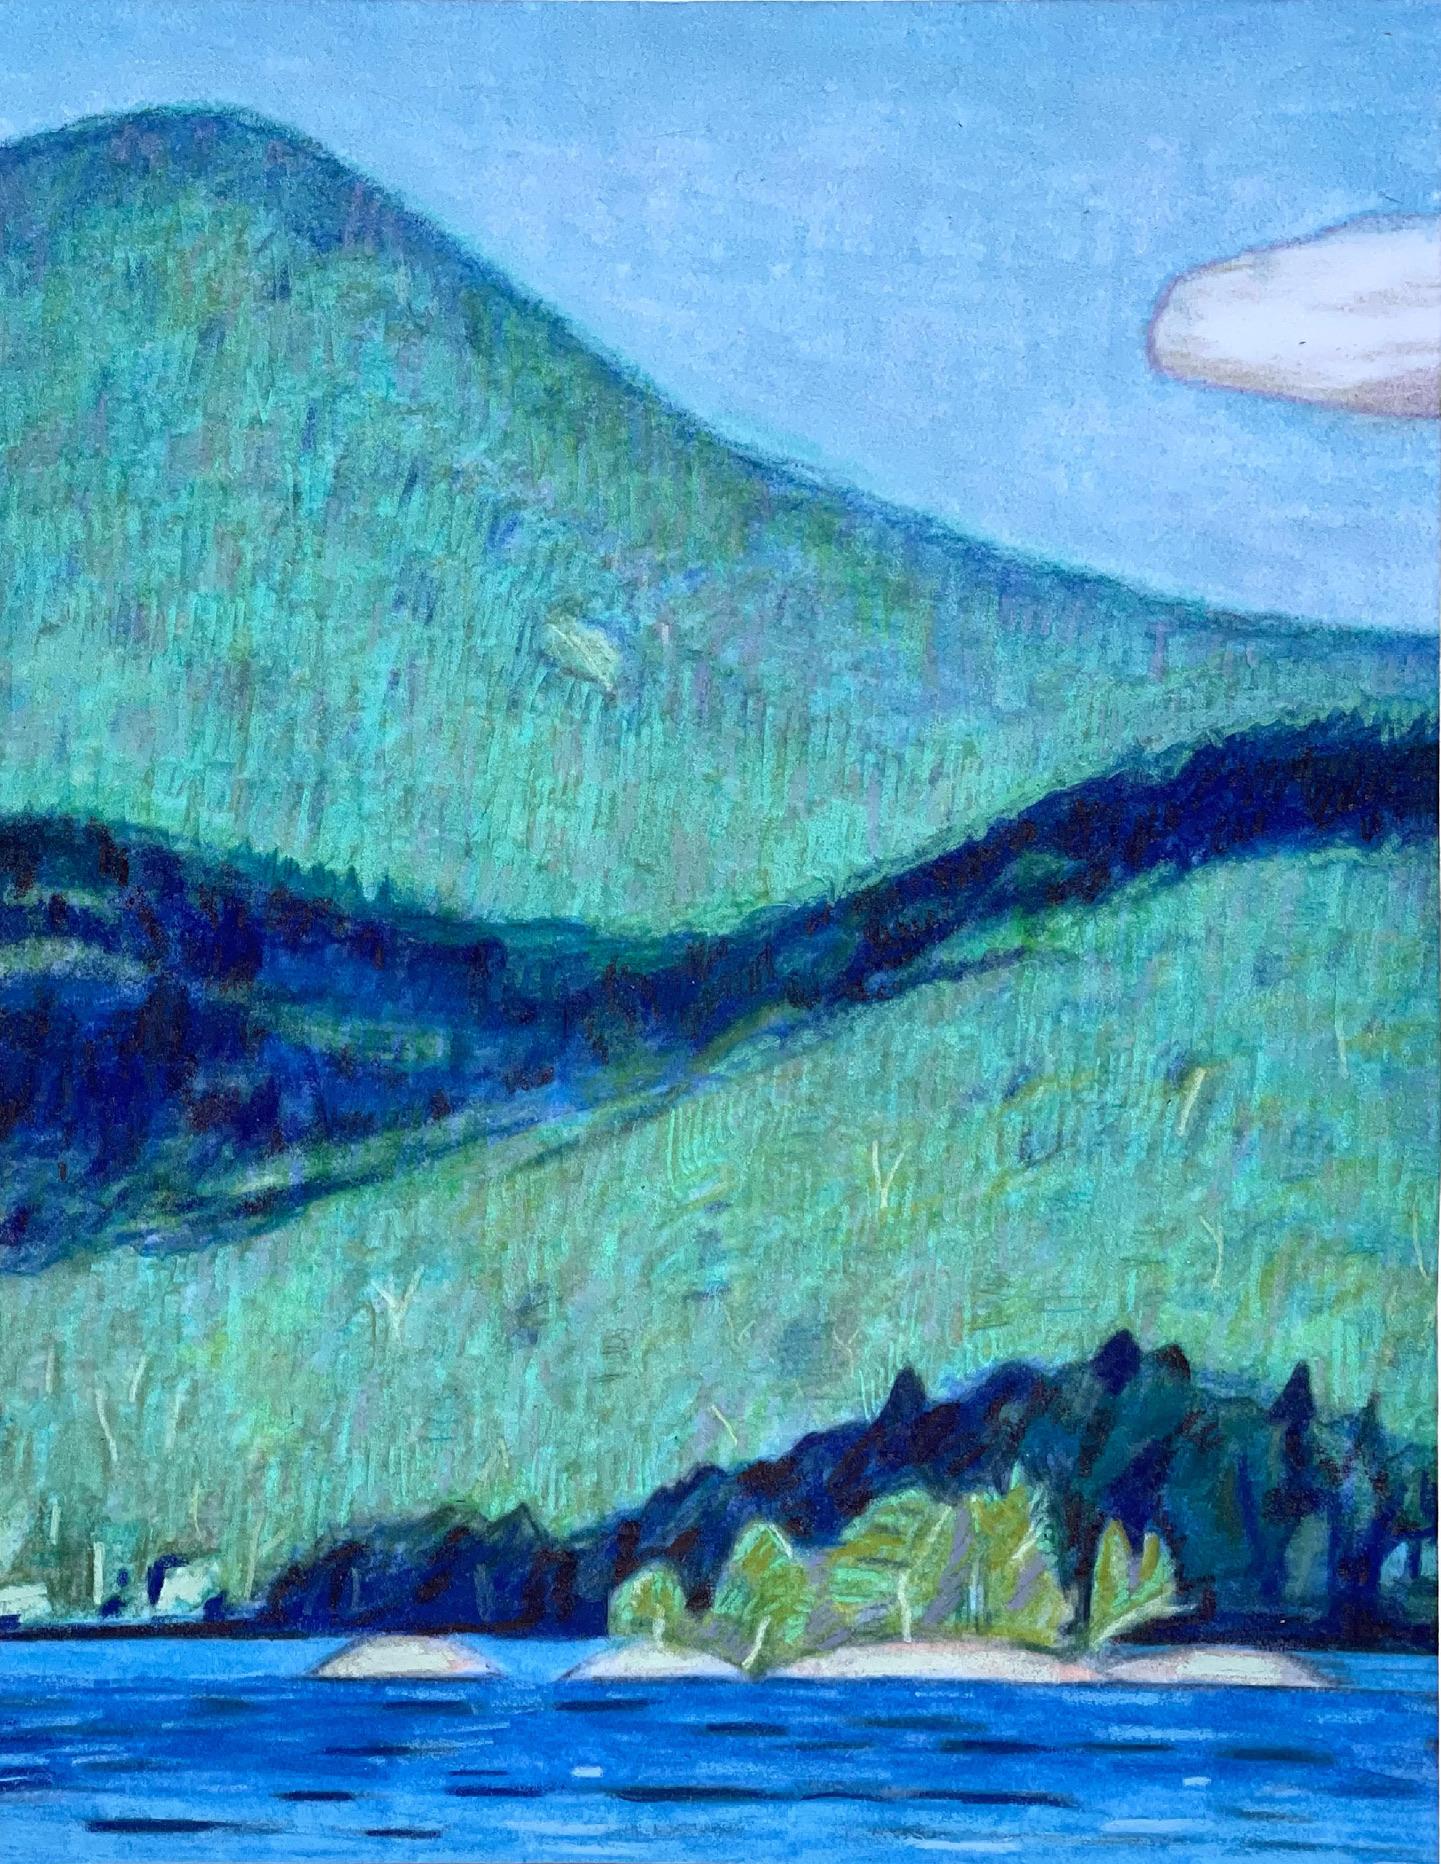 Lake 7 (cloud shadows), post-impressionistic landscape drawing